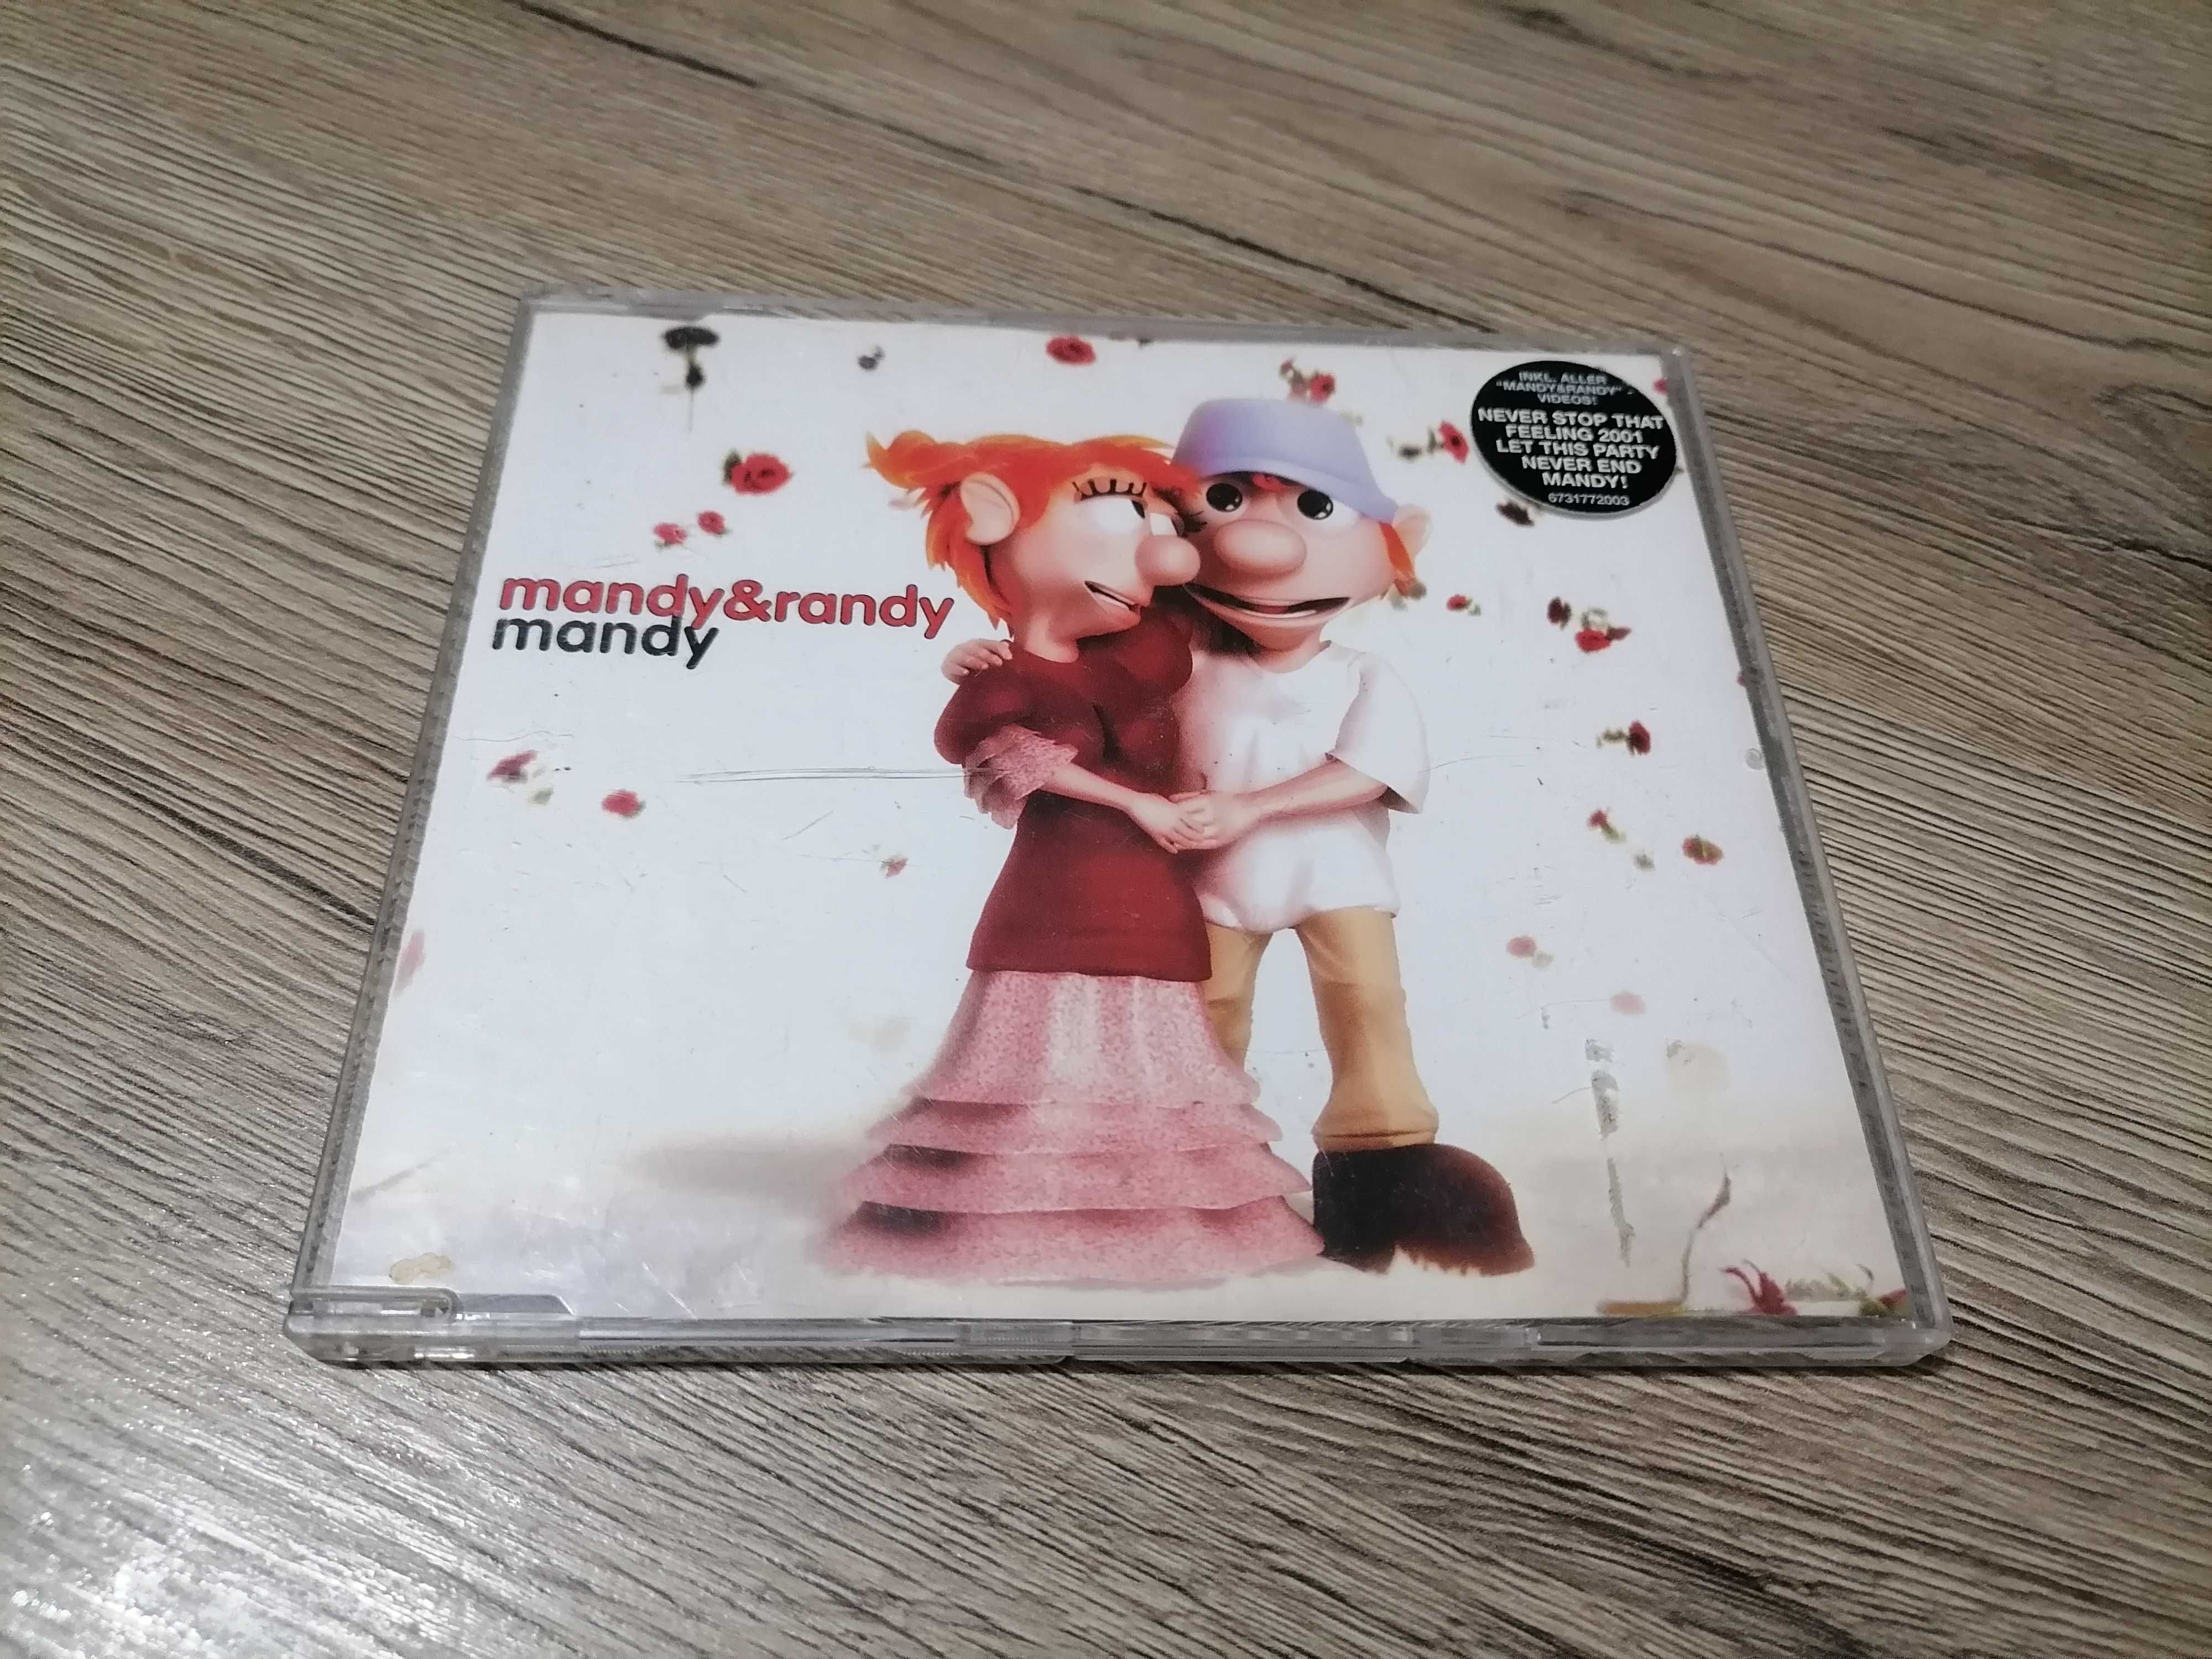 Mandy & Randy – Mandy CD